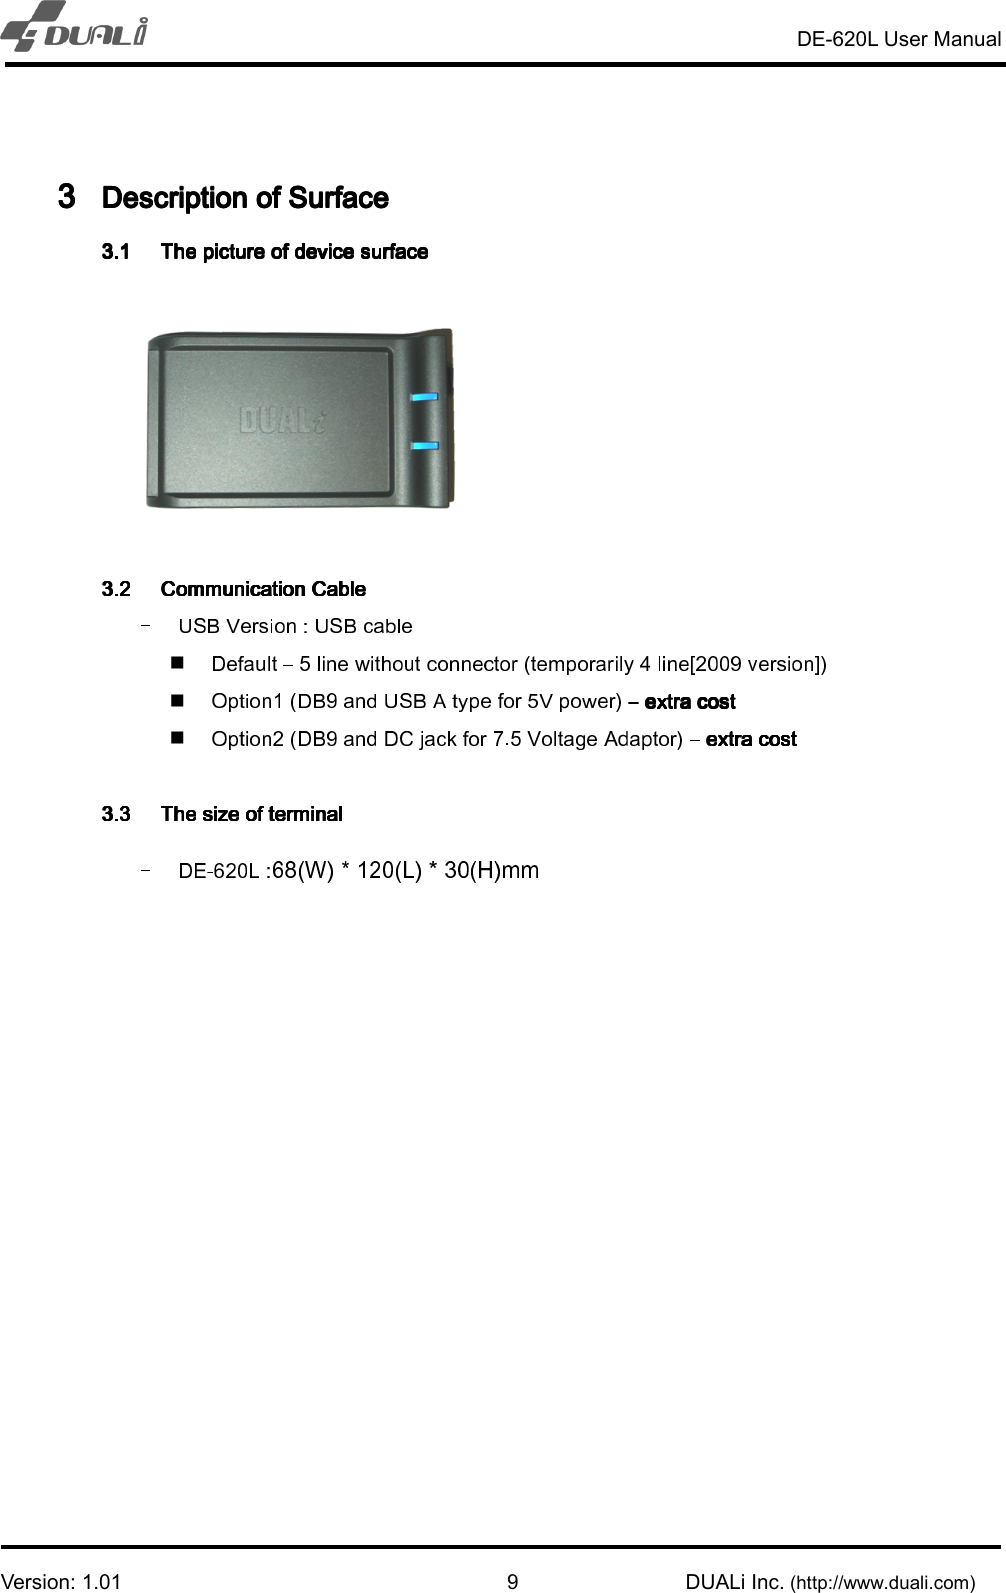   DE-620L User Manual  Version: 1.01                                                                                                            DUALi Inc. (http://www.duali.com) 93333 Description of SurfaceDescription of SurfaceDescription of SurfaceDescription of Surface            